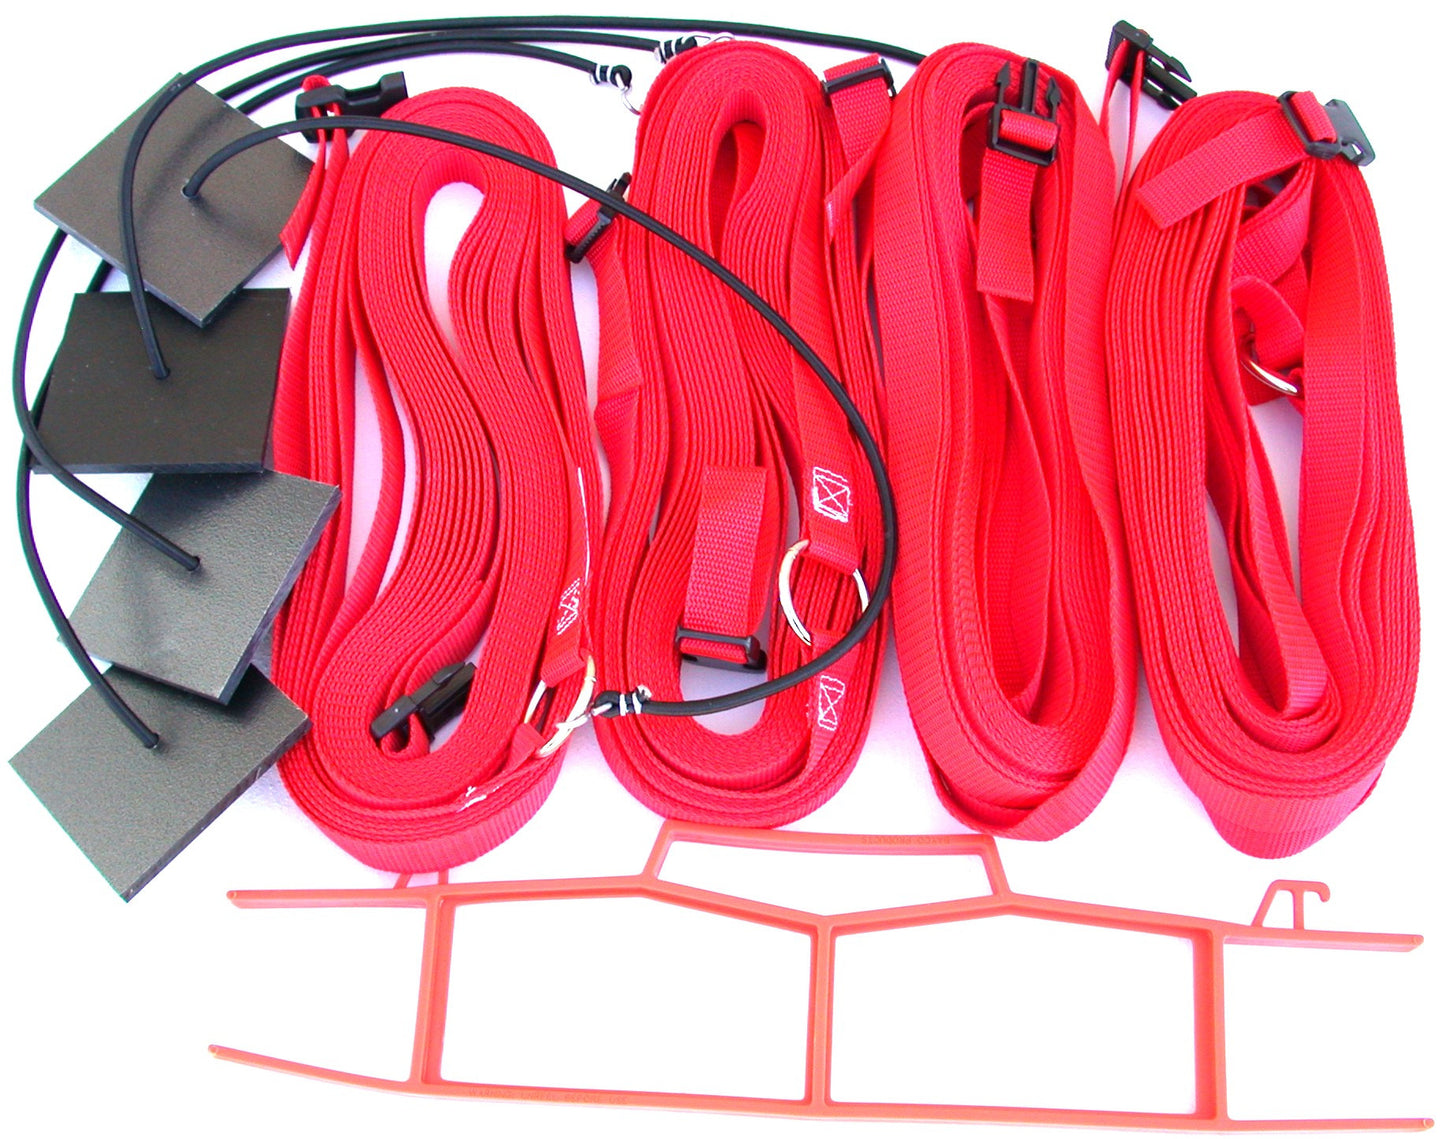 17ARB-red 1-inch adjustable web boundary, sand plates, storage winder